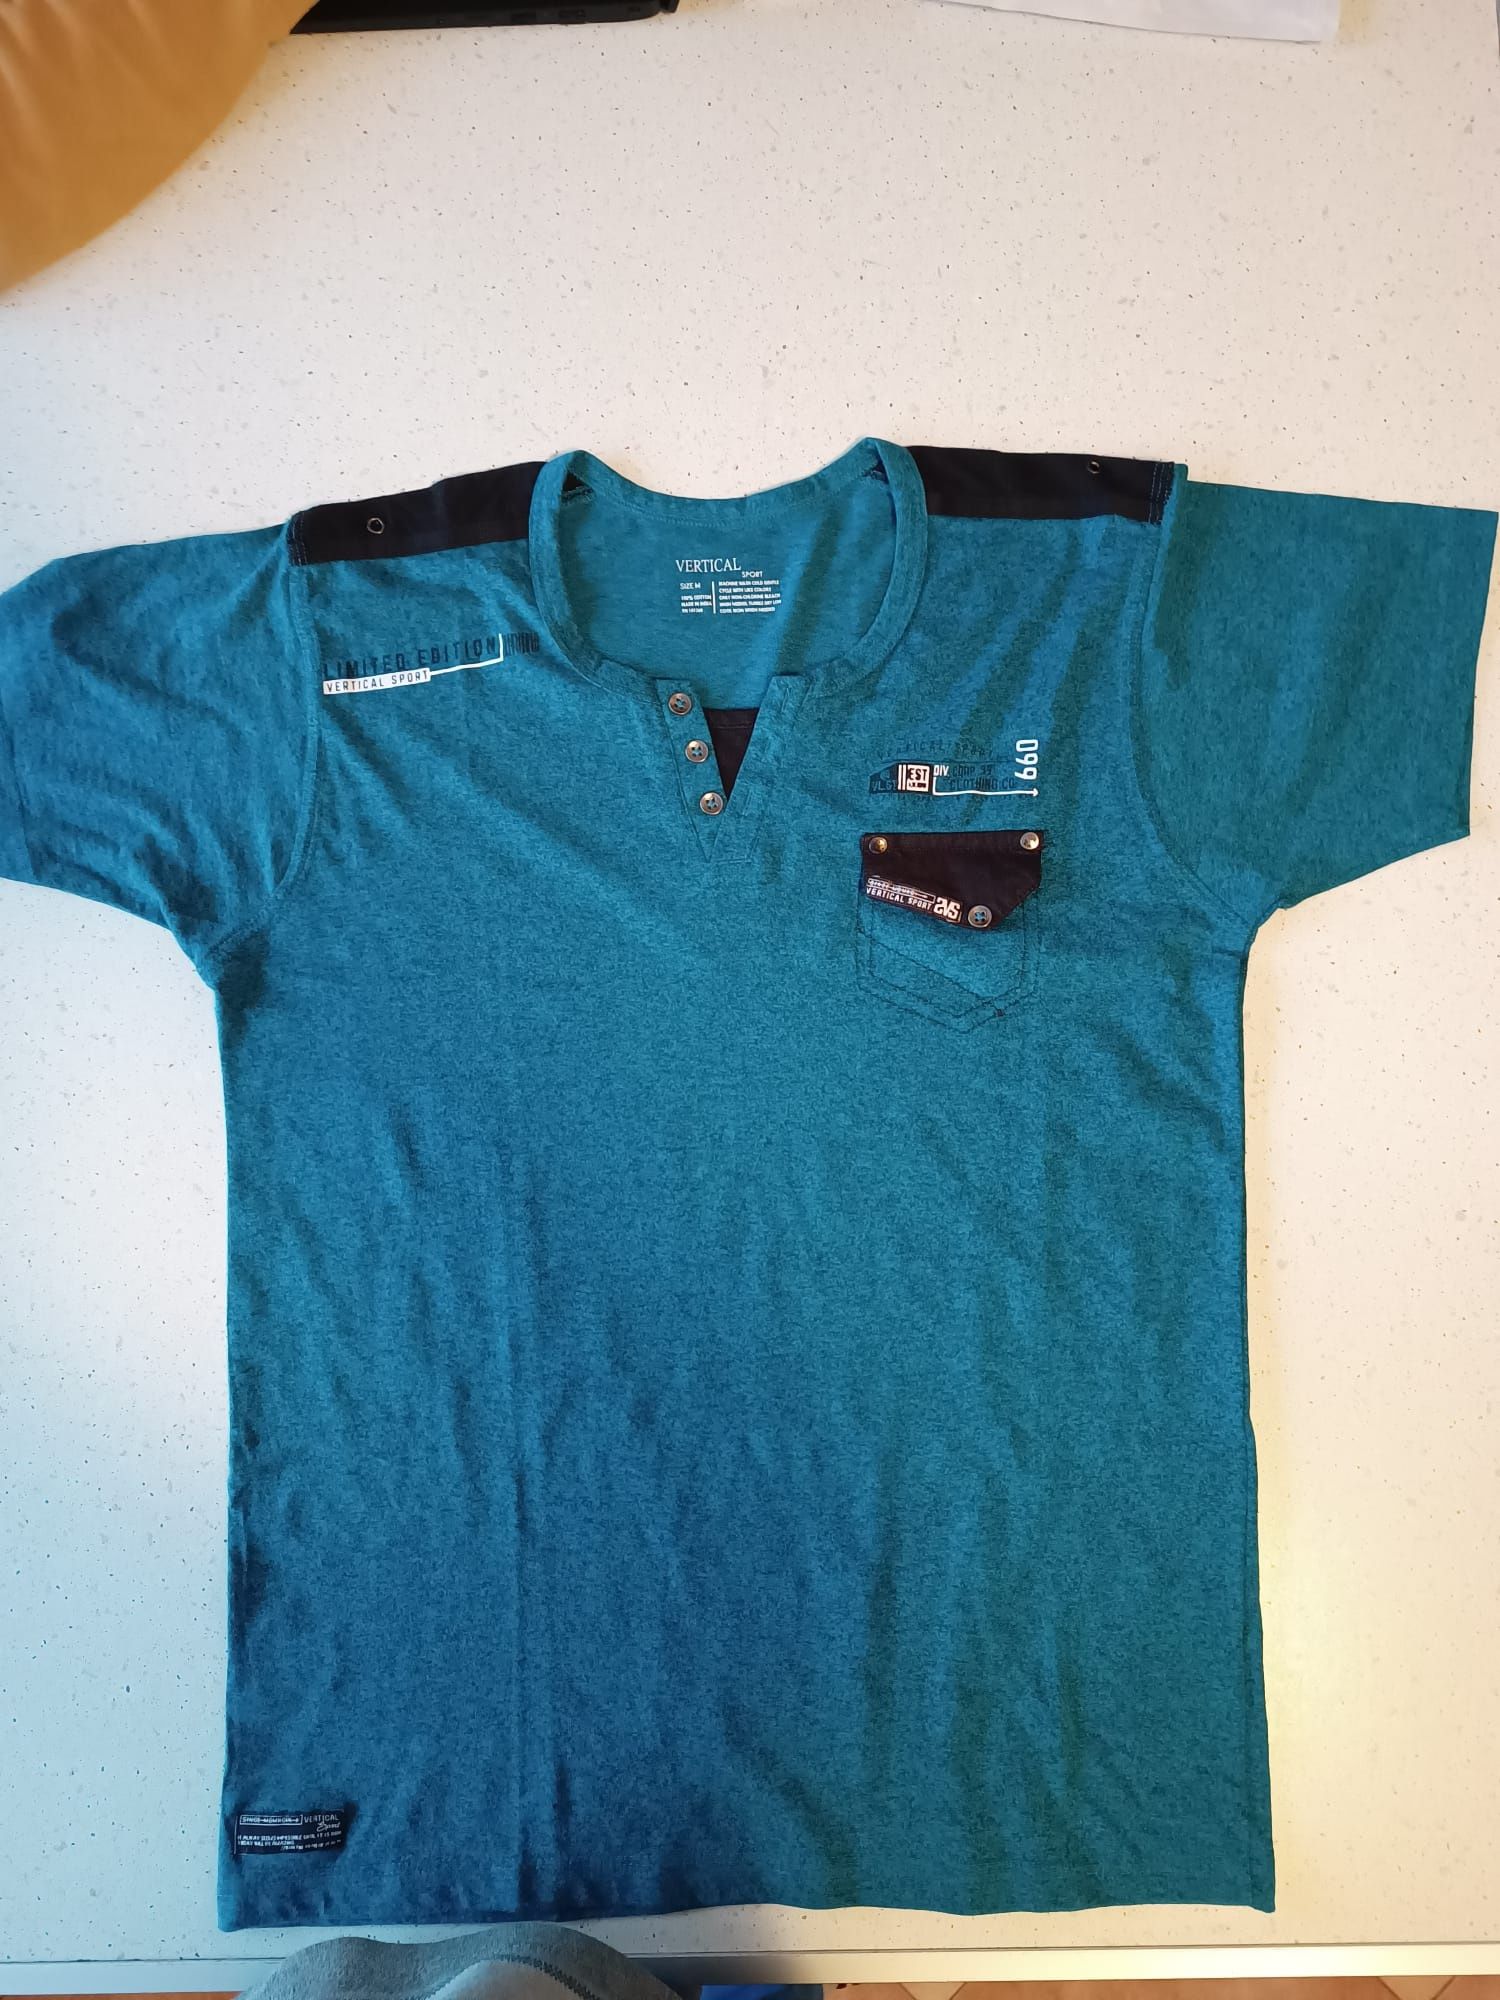 t-shirt / koszulka, VERTICAL, rozmiar M (13-14 lat), nowa, bez metki